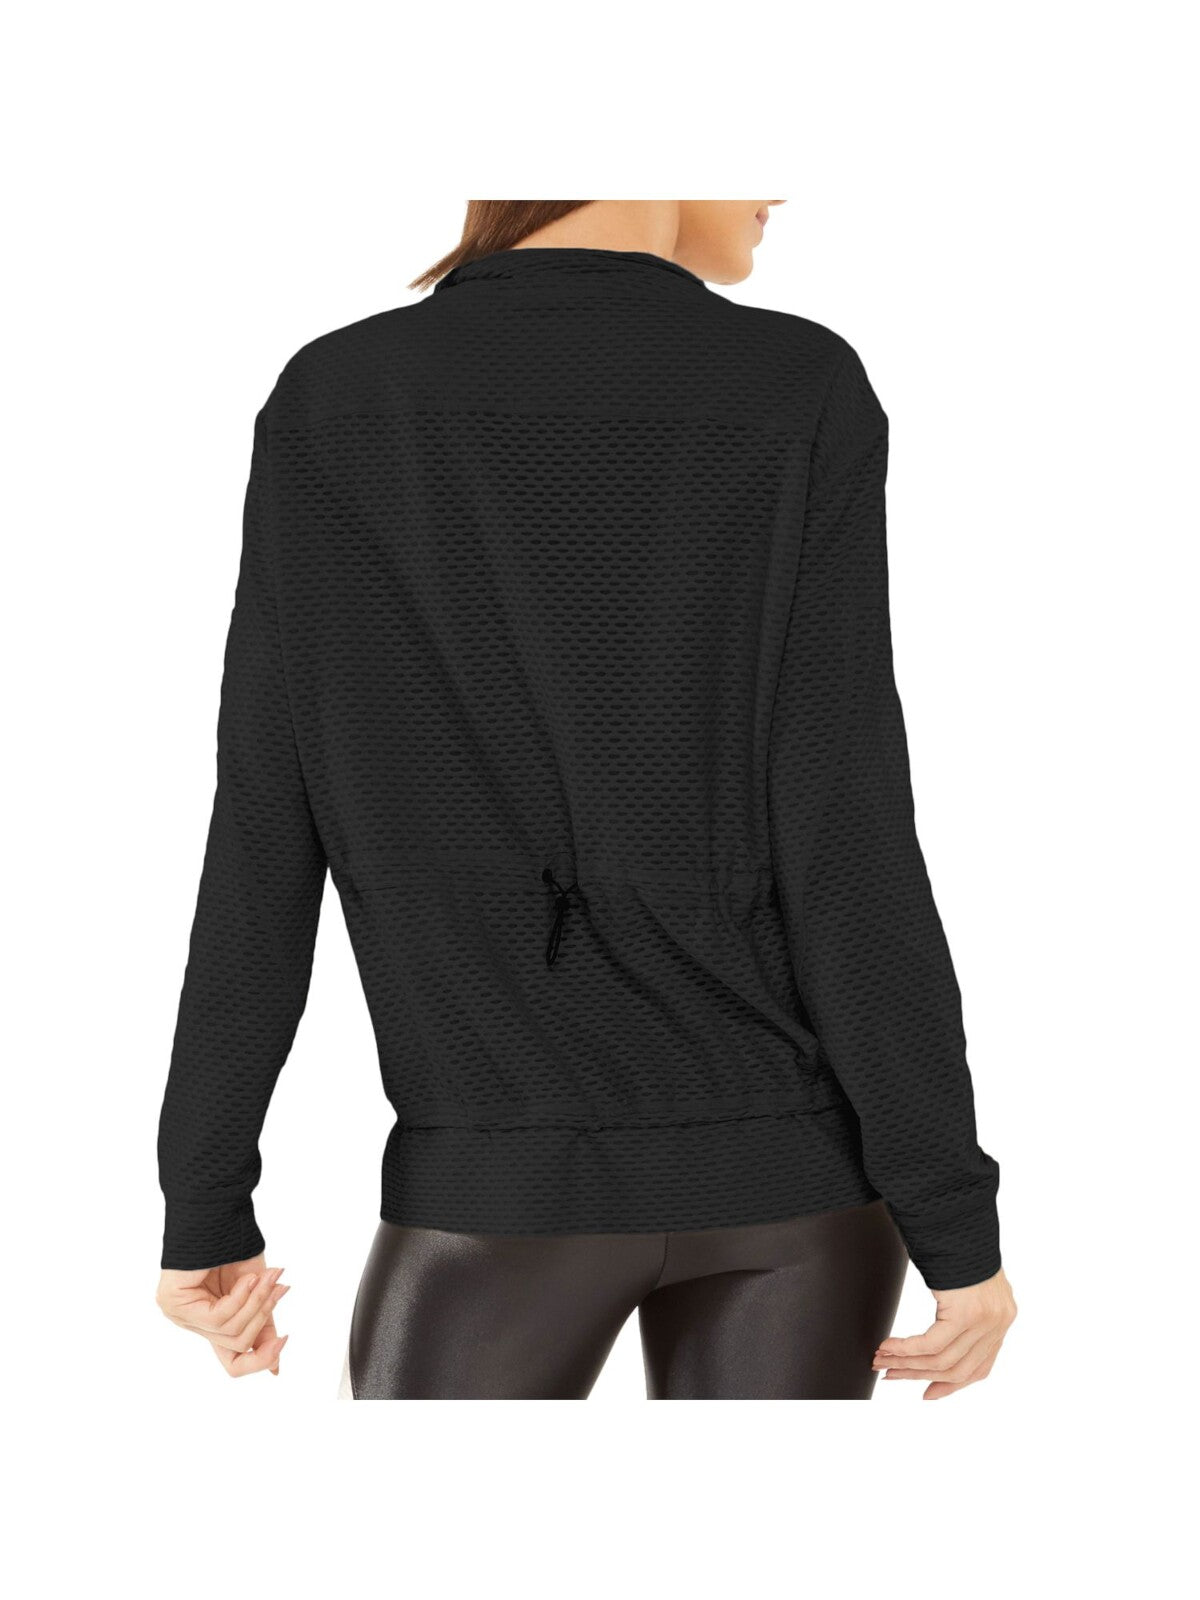 KORAL Womens Black Mesh Pocketed Long Sleeve Collared Zip Up Jacket M